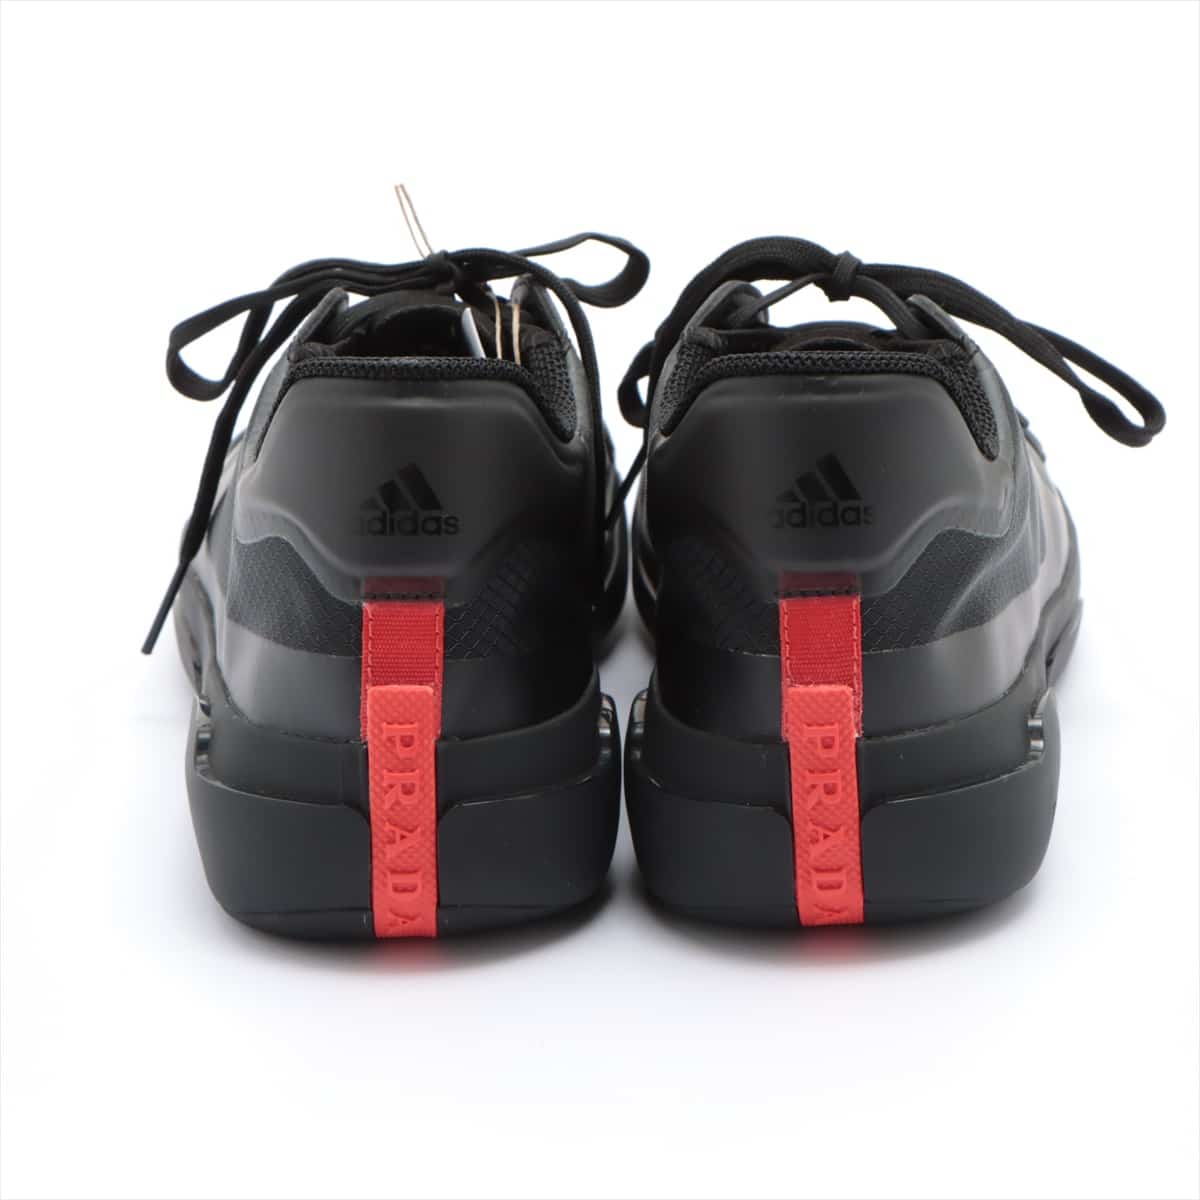 Prada Sport x adidas Mesh x leather Sneakers 9.5 Men's Black G57868